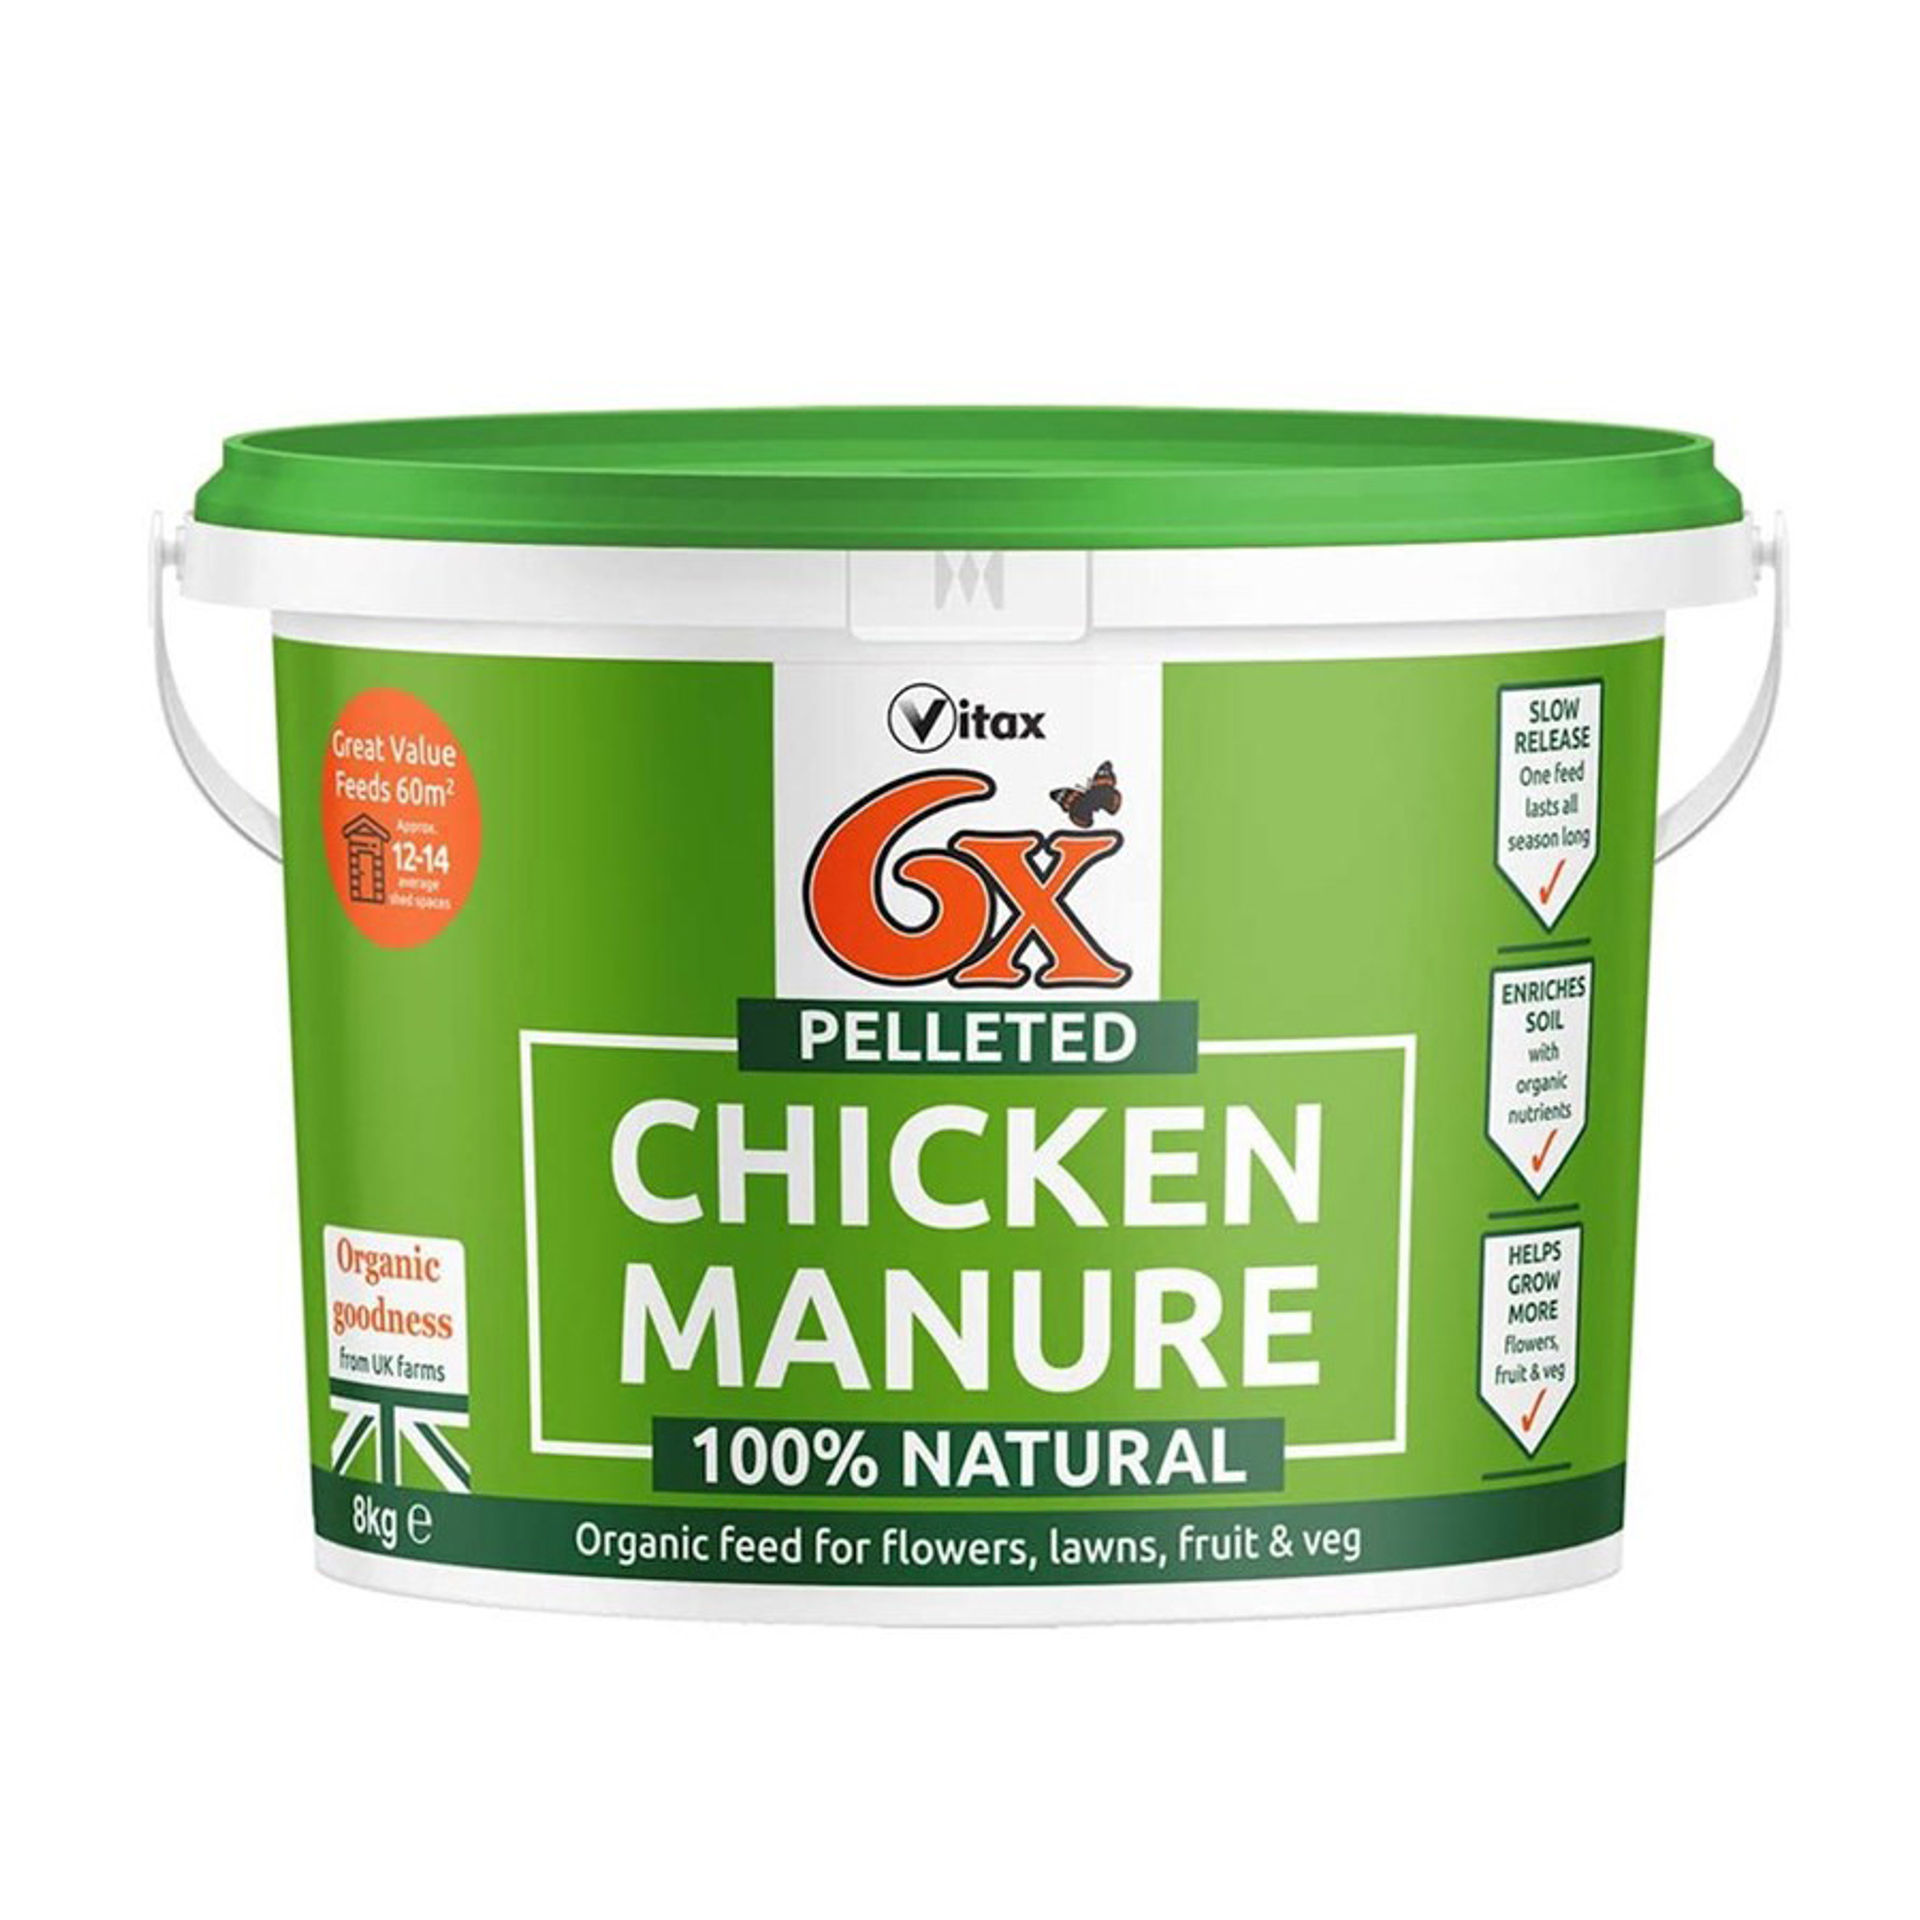 Vitax 6X Organic Pelleted Chicken Manure